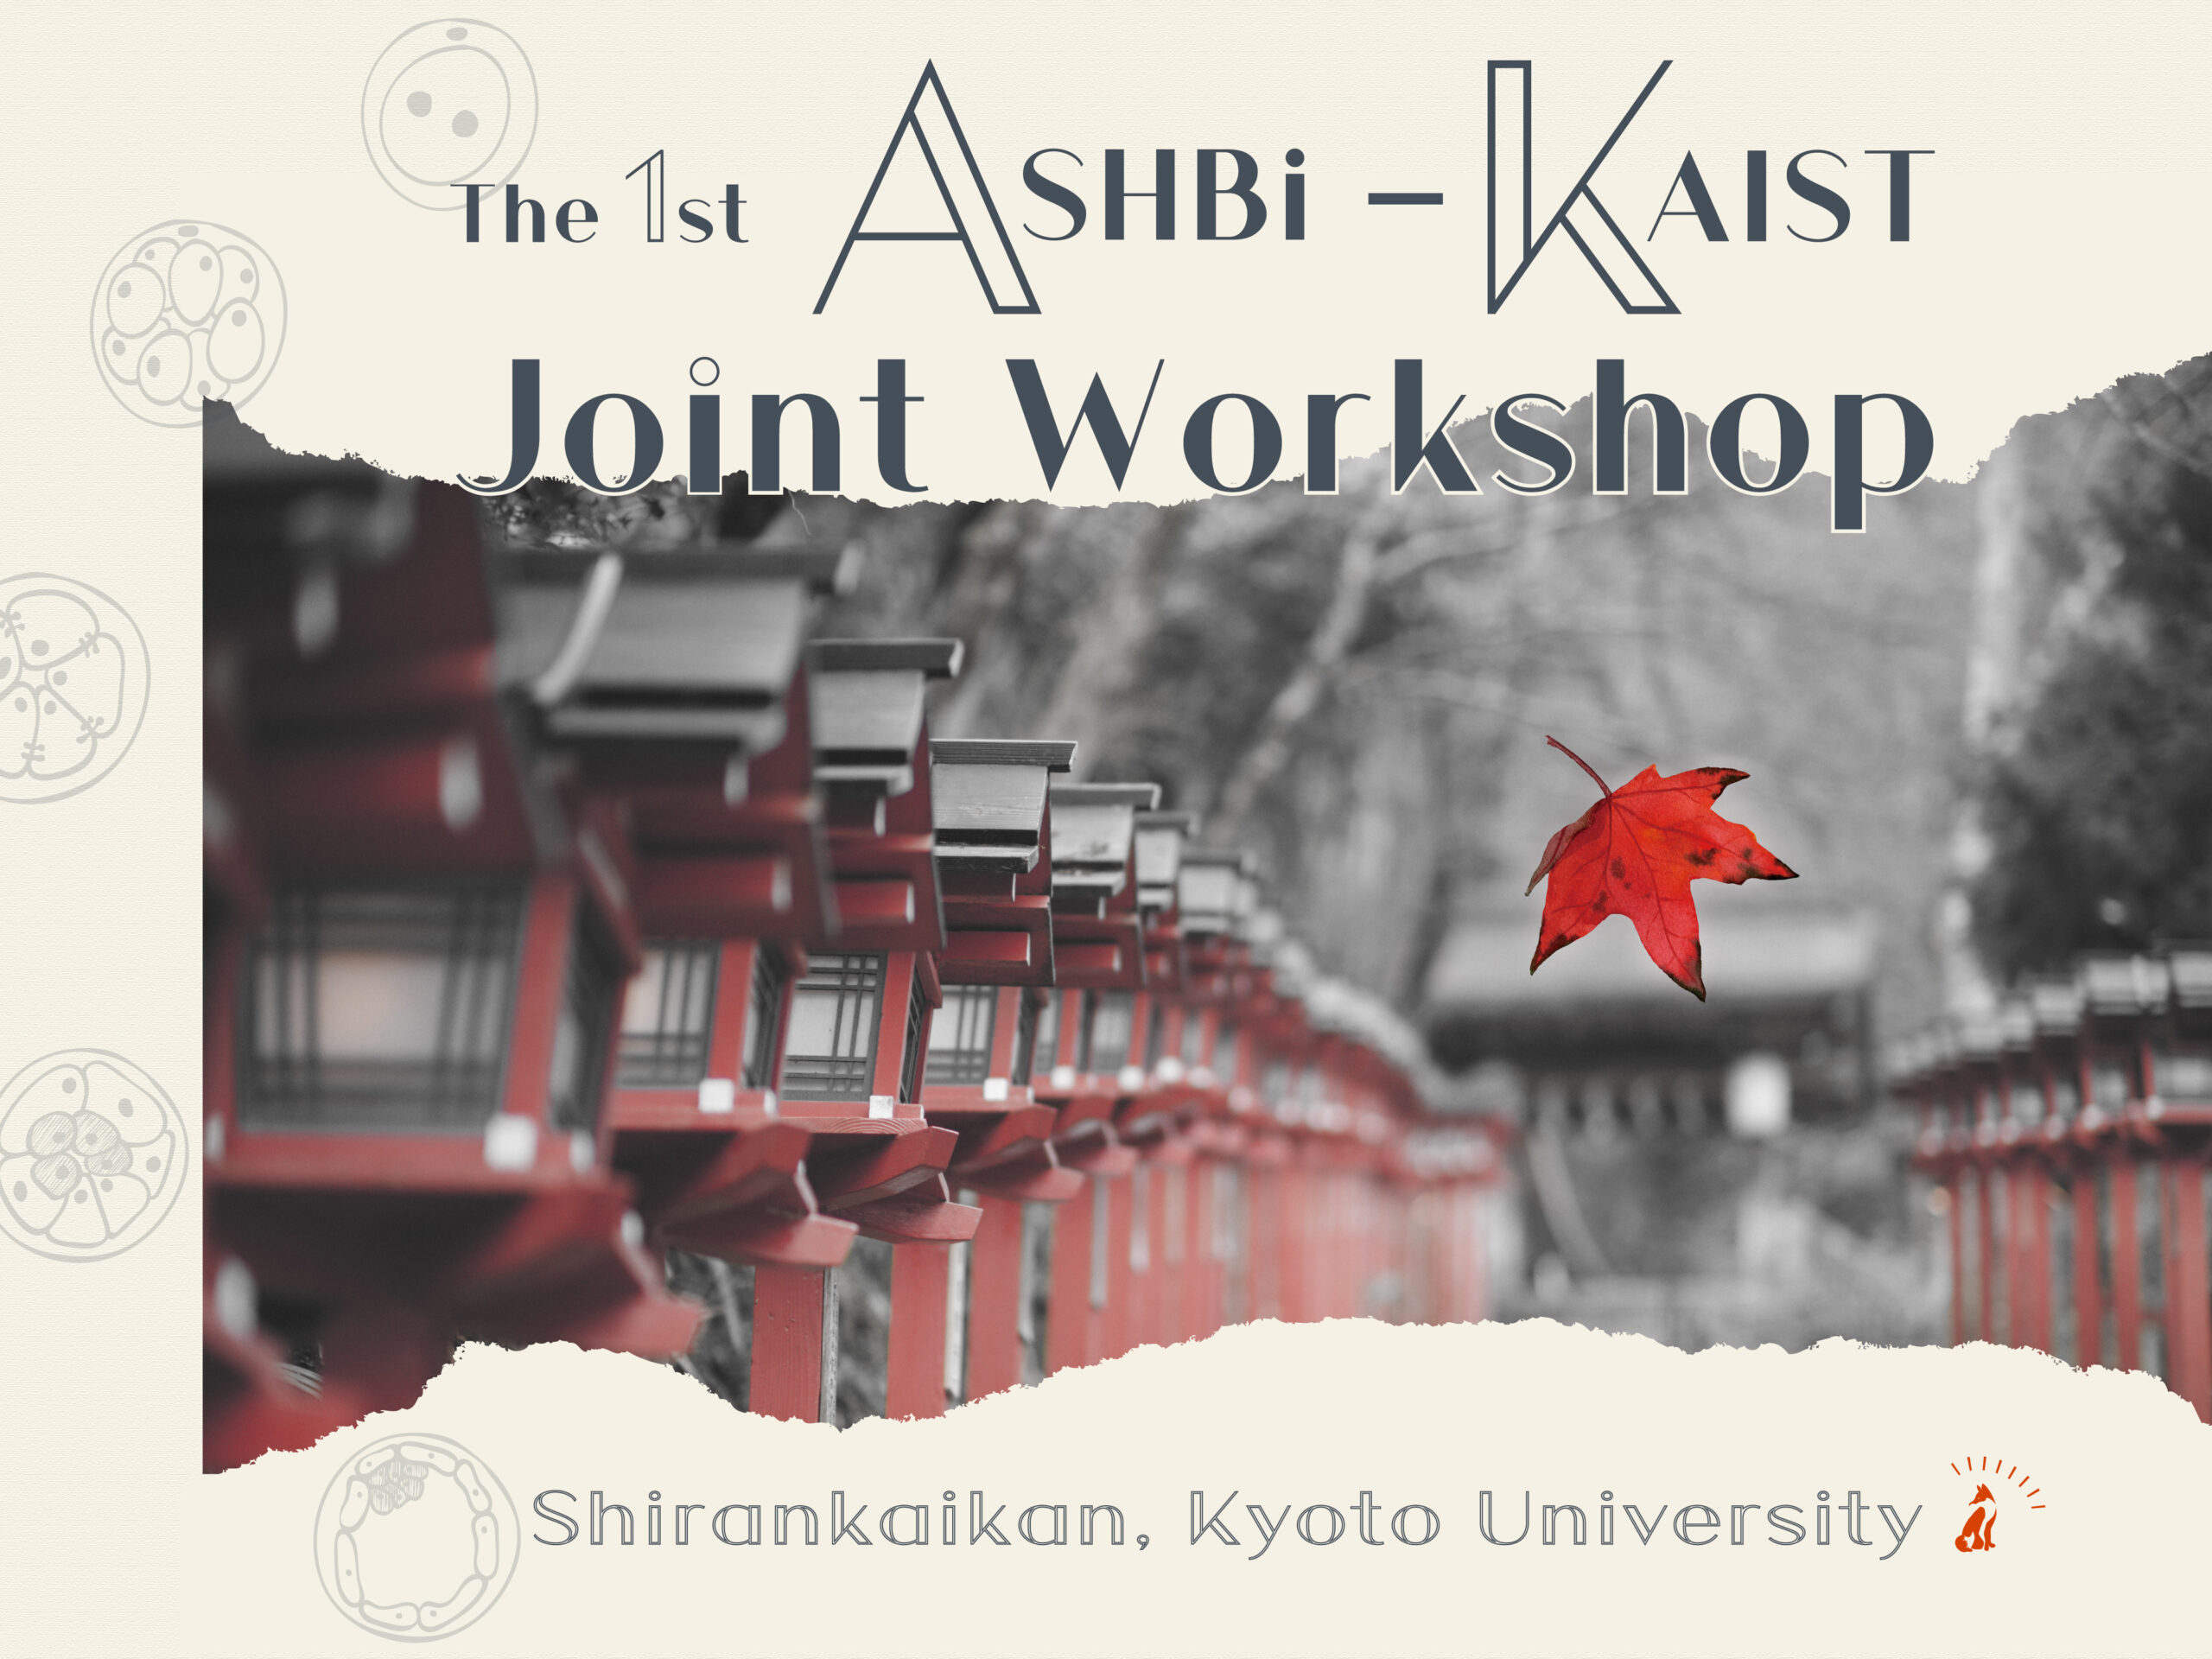 The 1st ASHBi-KAIST Joint Workshop